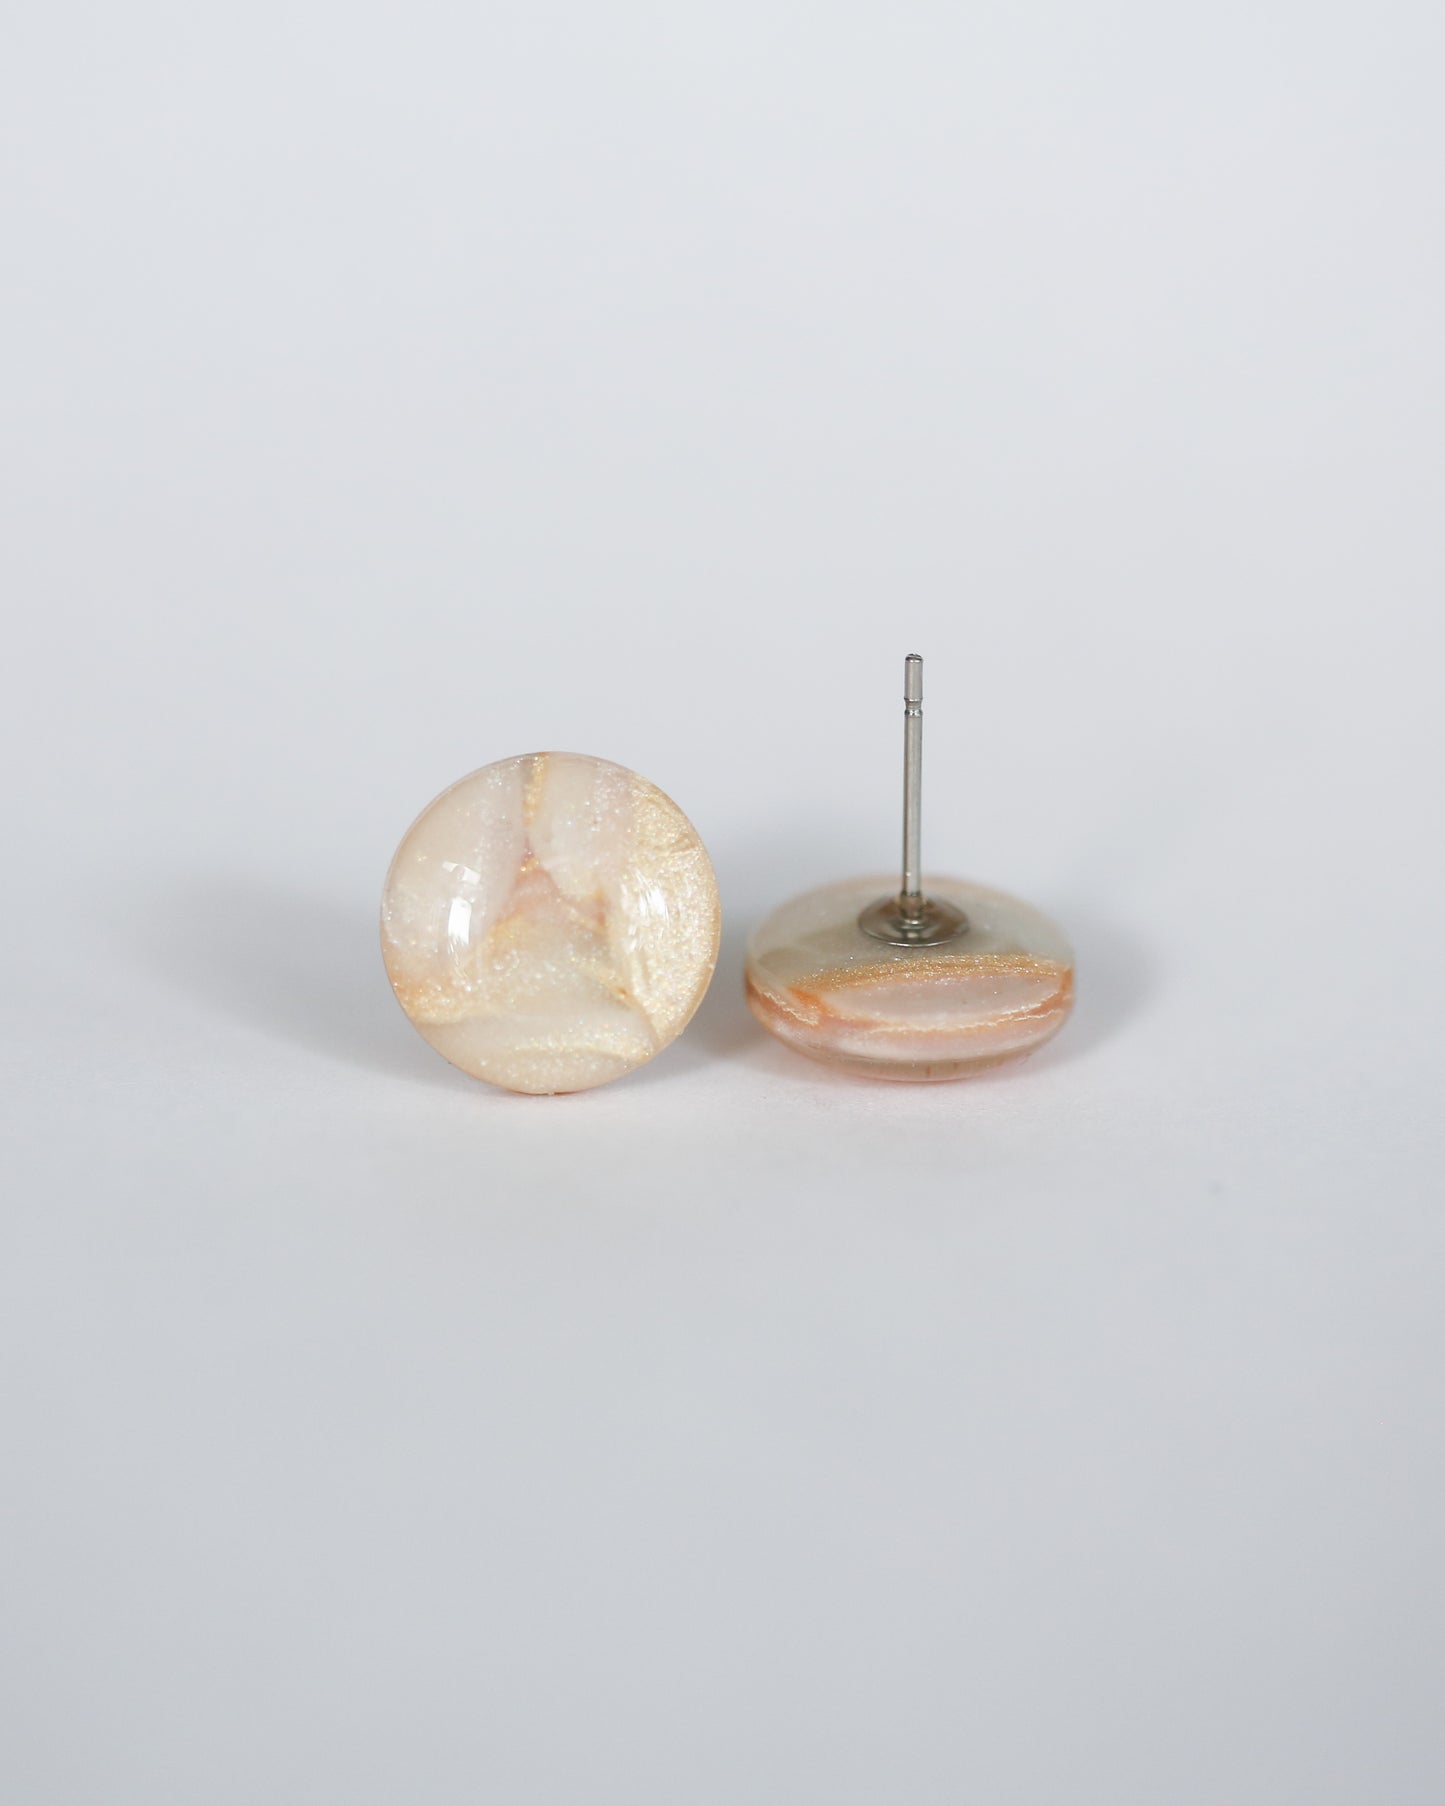 Delicate pearl stud earrings freeshipping - Ollijewelry